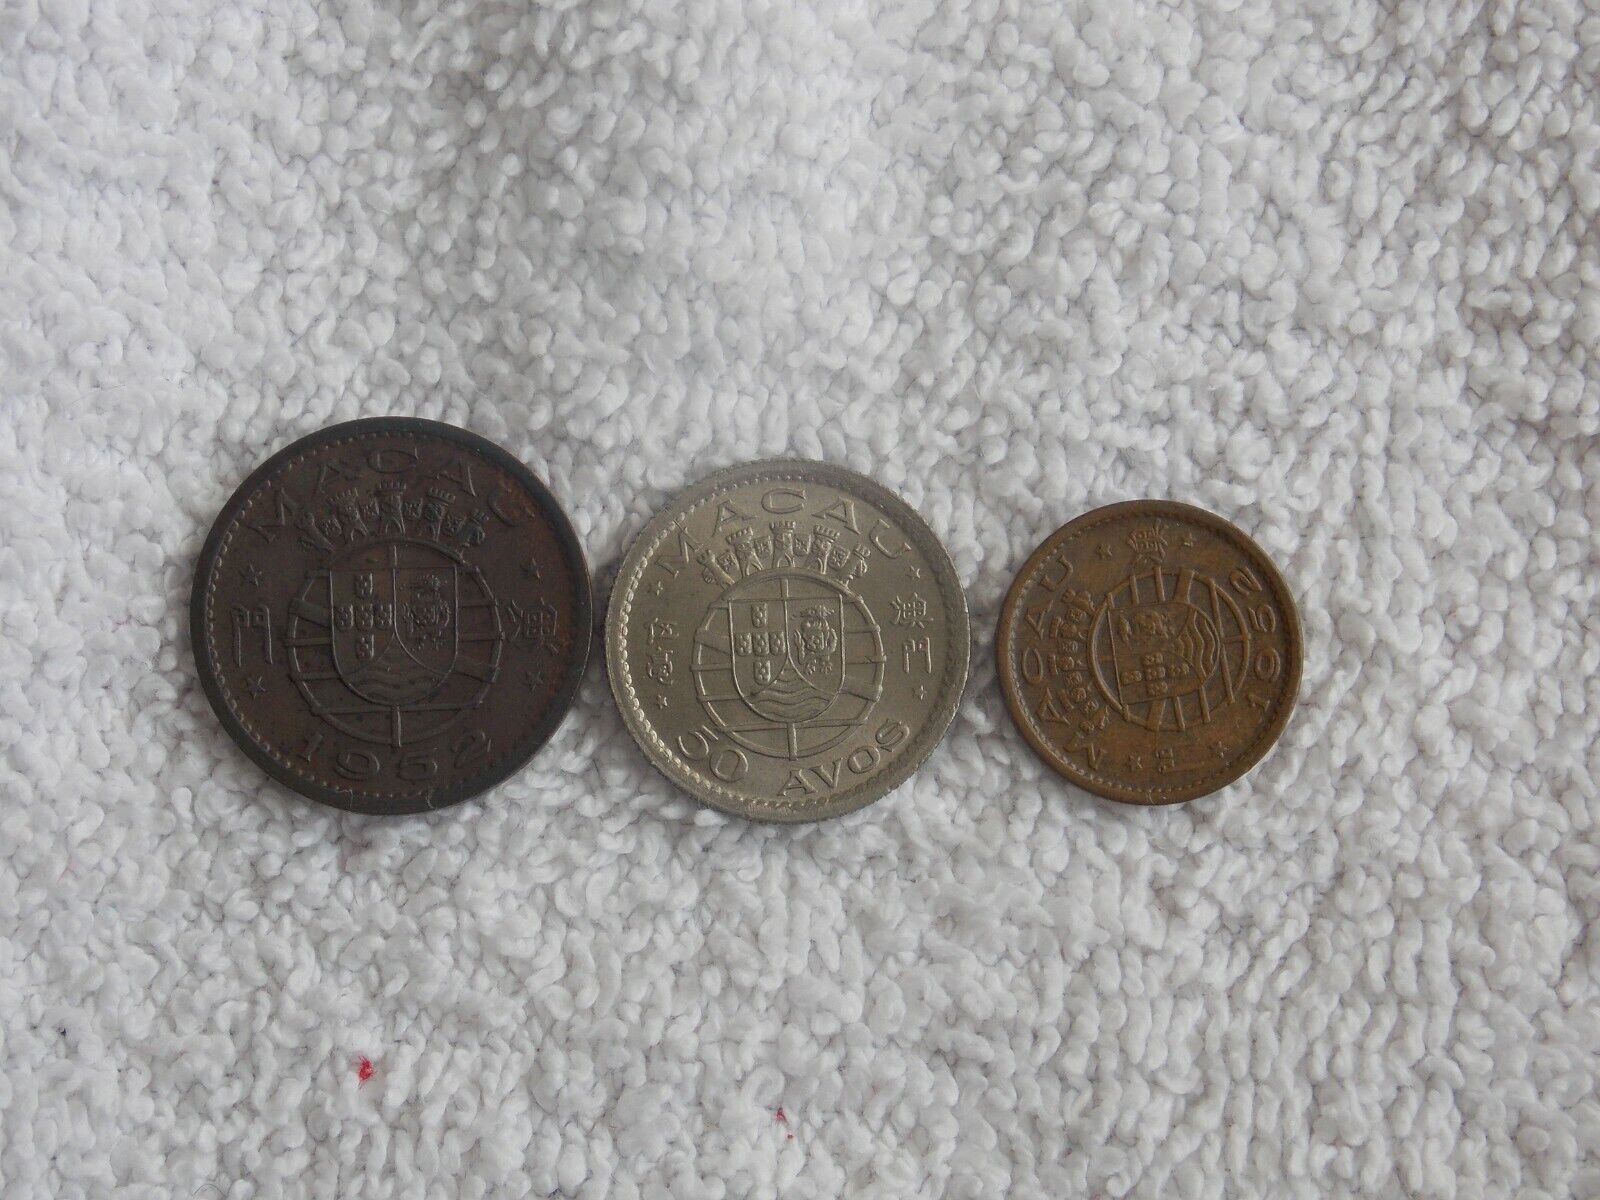 Angola and Macau coins Без бренда - фотография #2